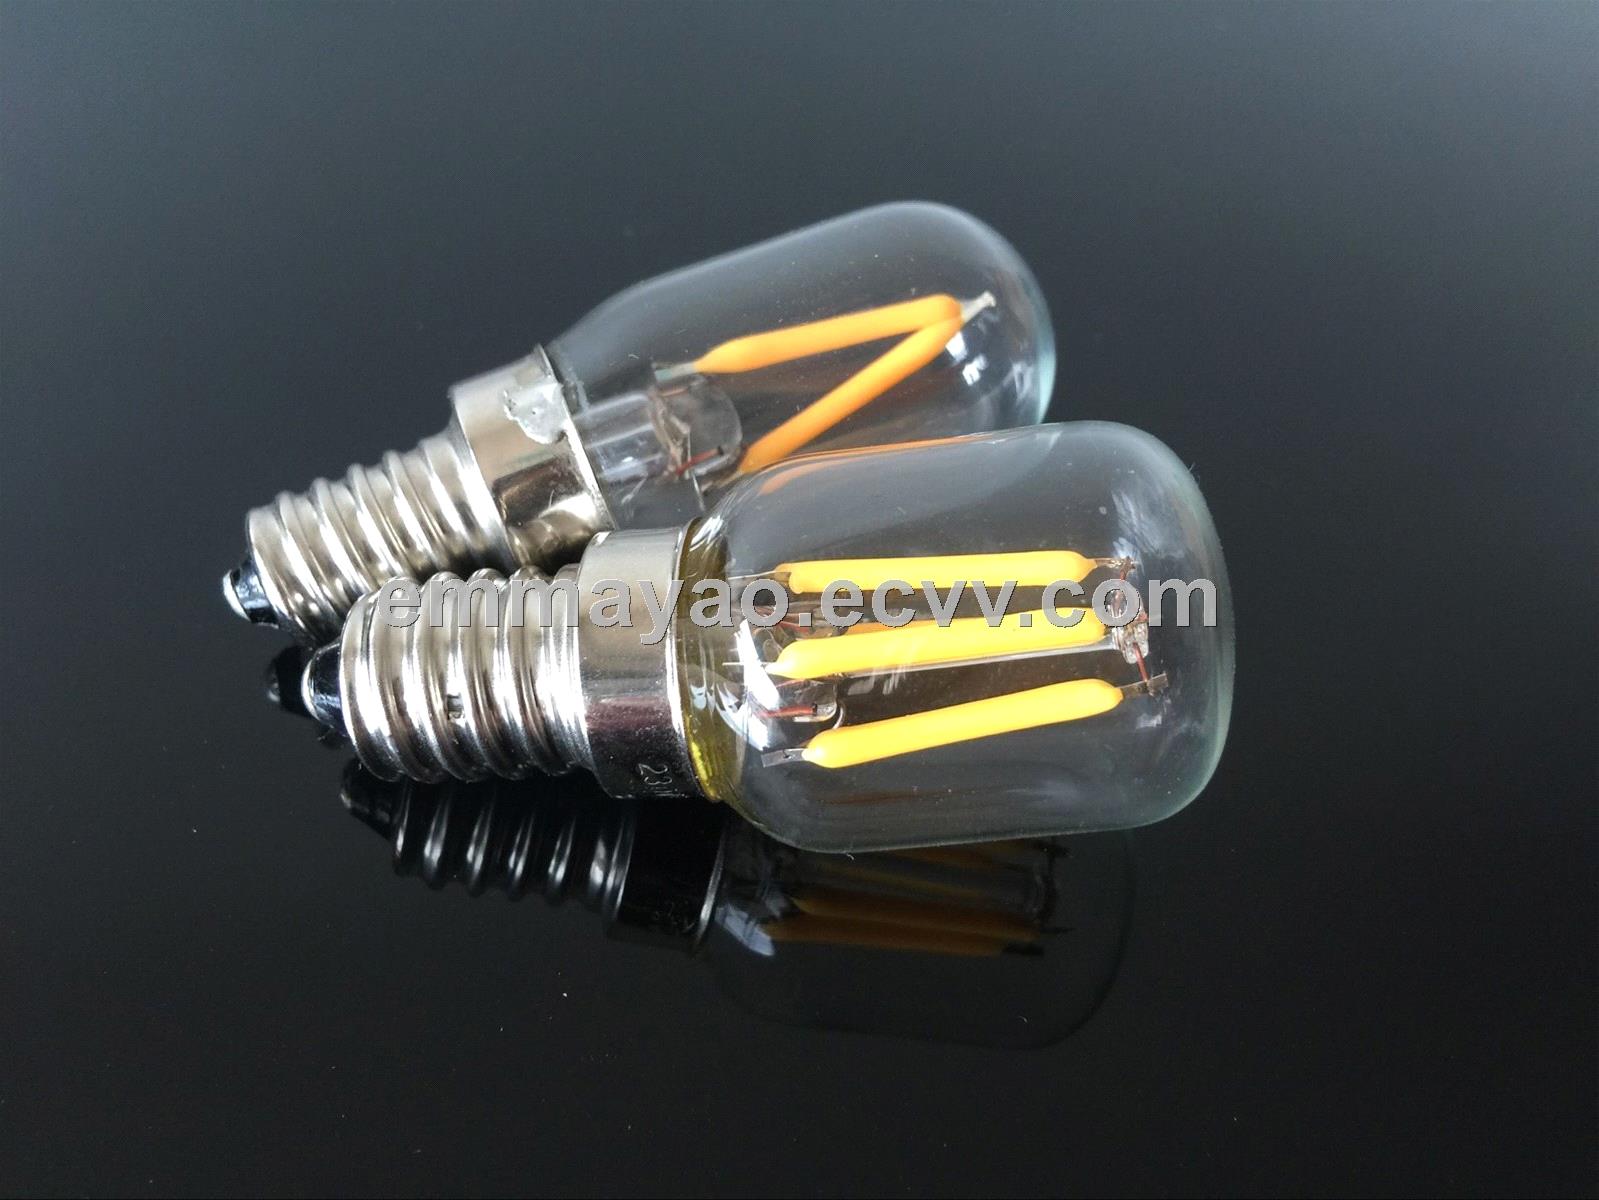 Tube T25 small filament led bulb energy save led bulb